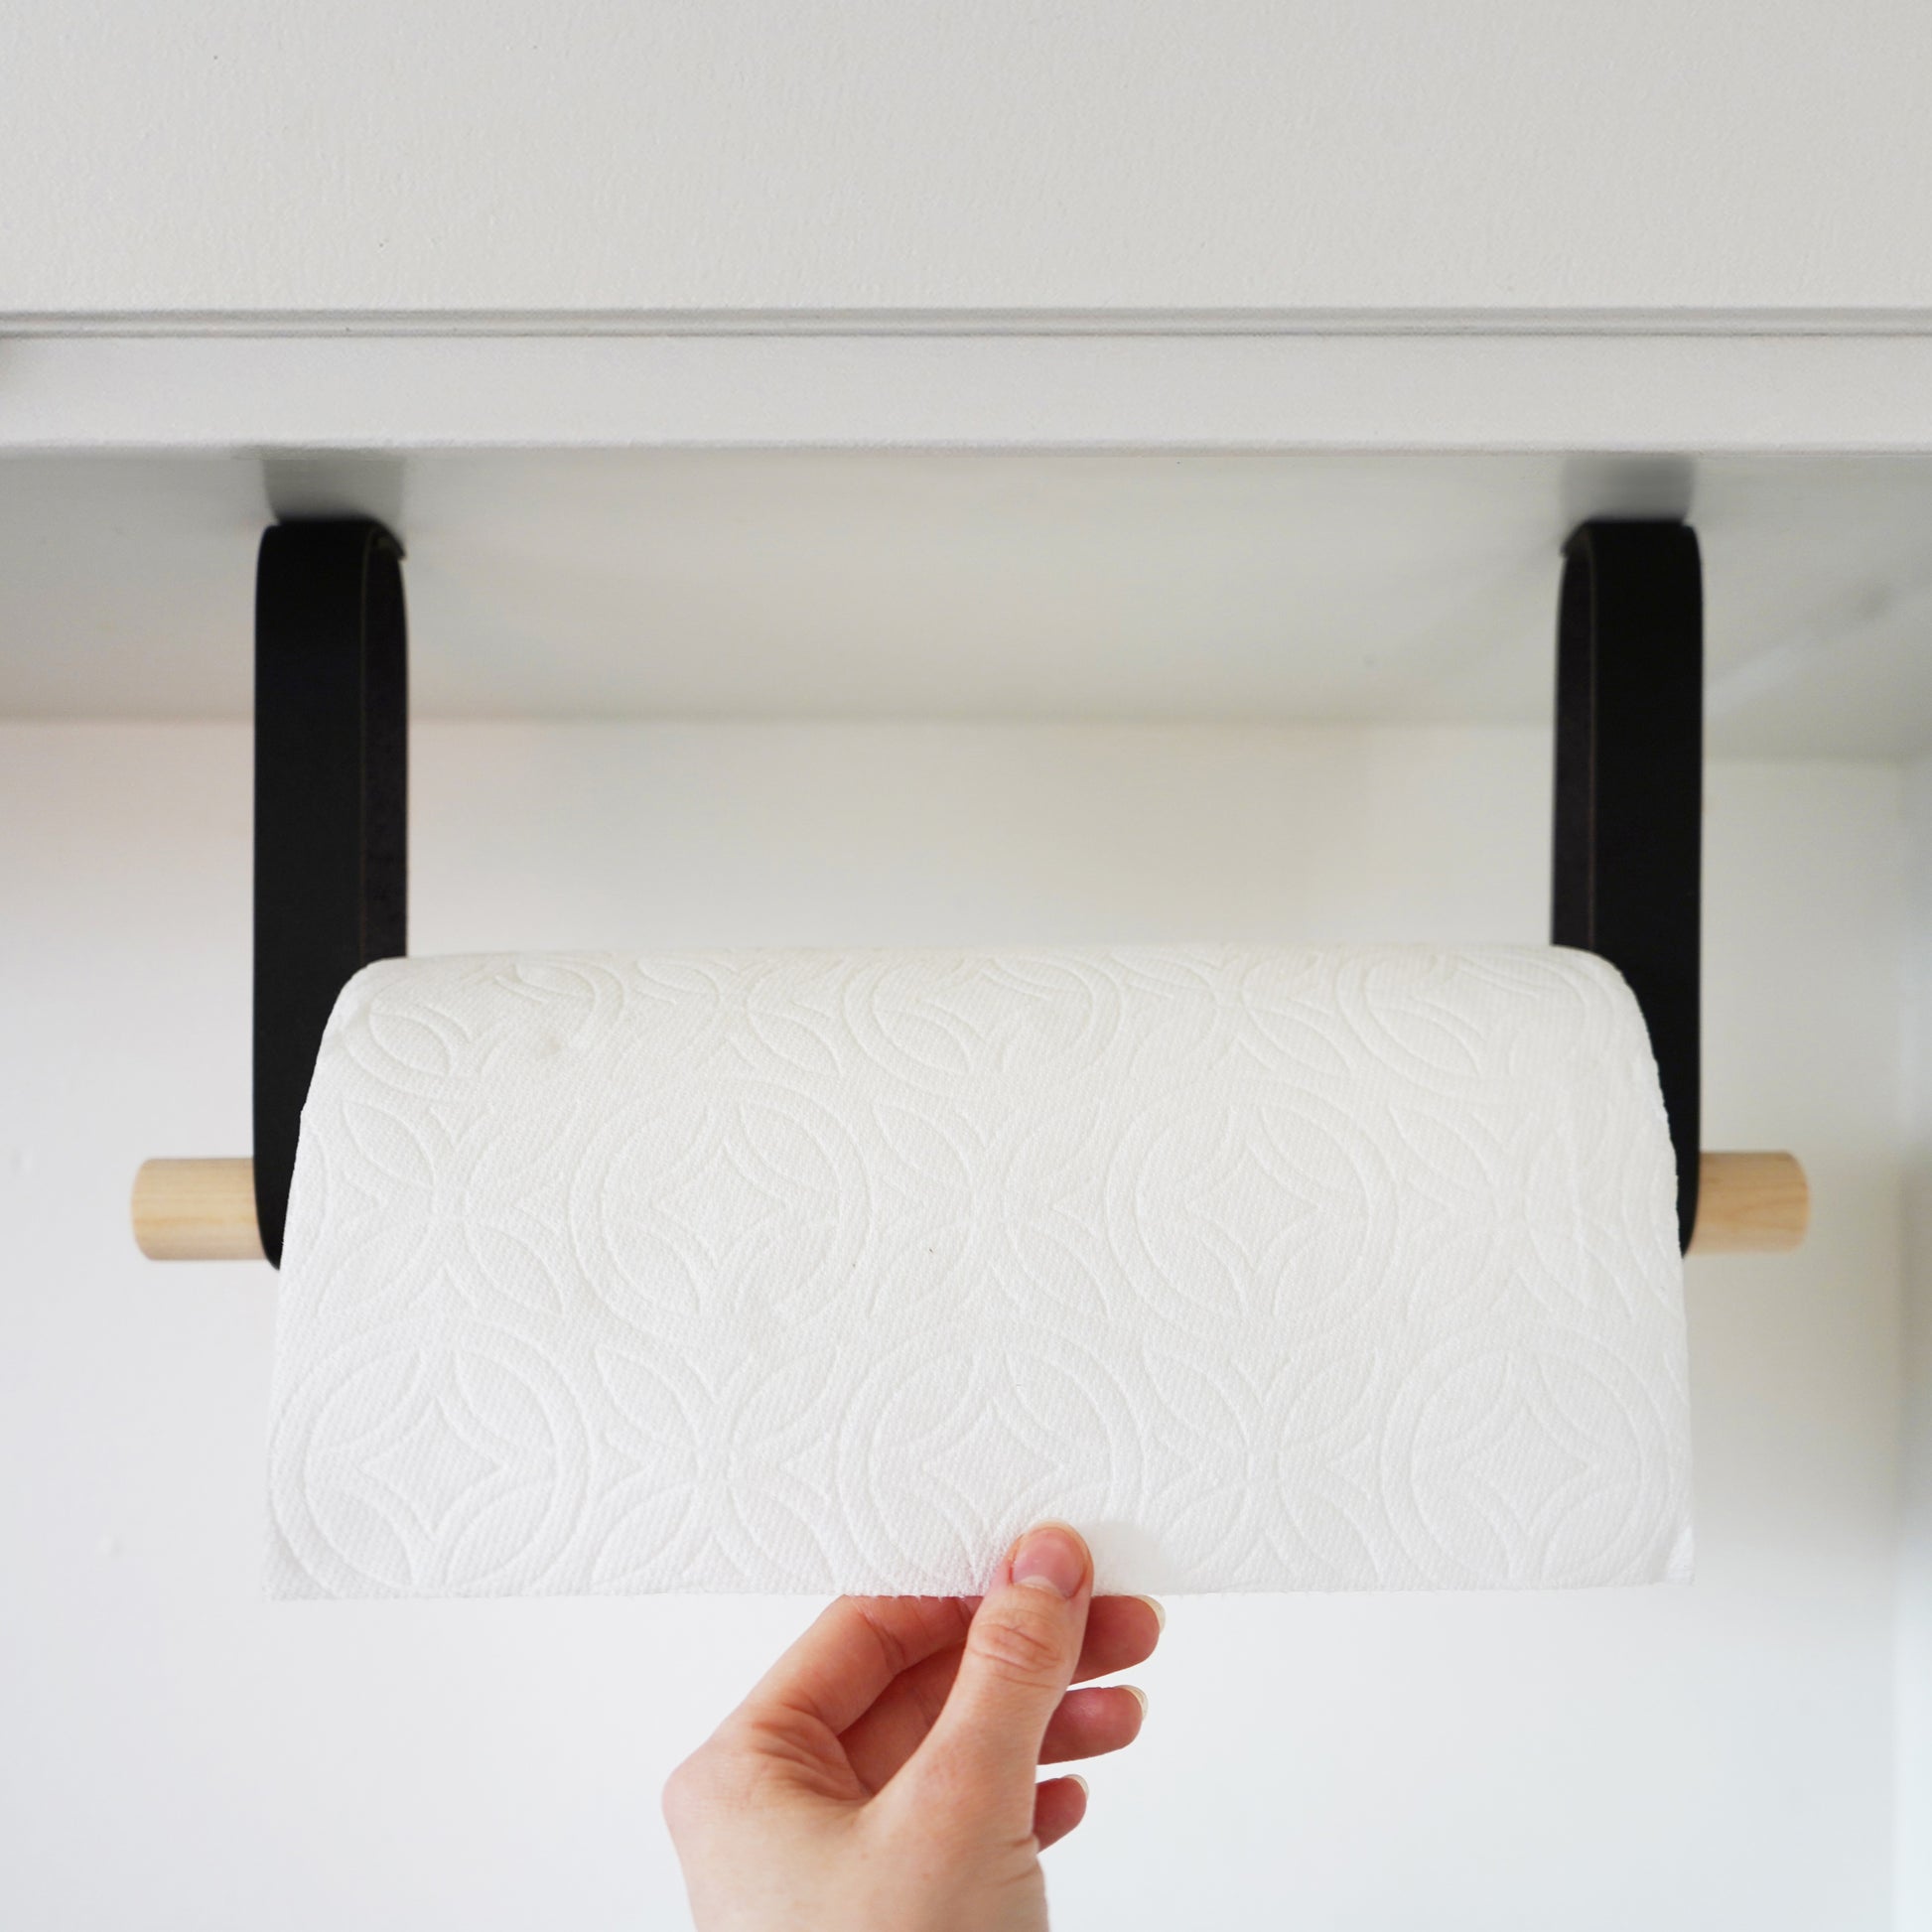 Paper Towel Holders - Under Cabinet Paper Towel Roll Rack Mount